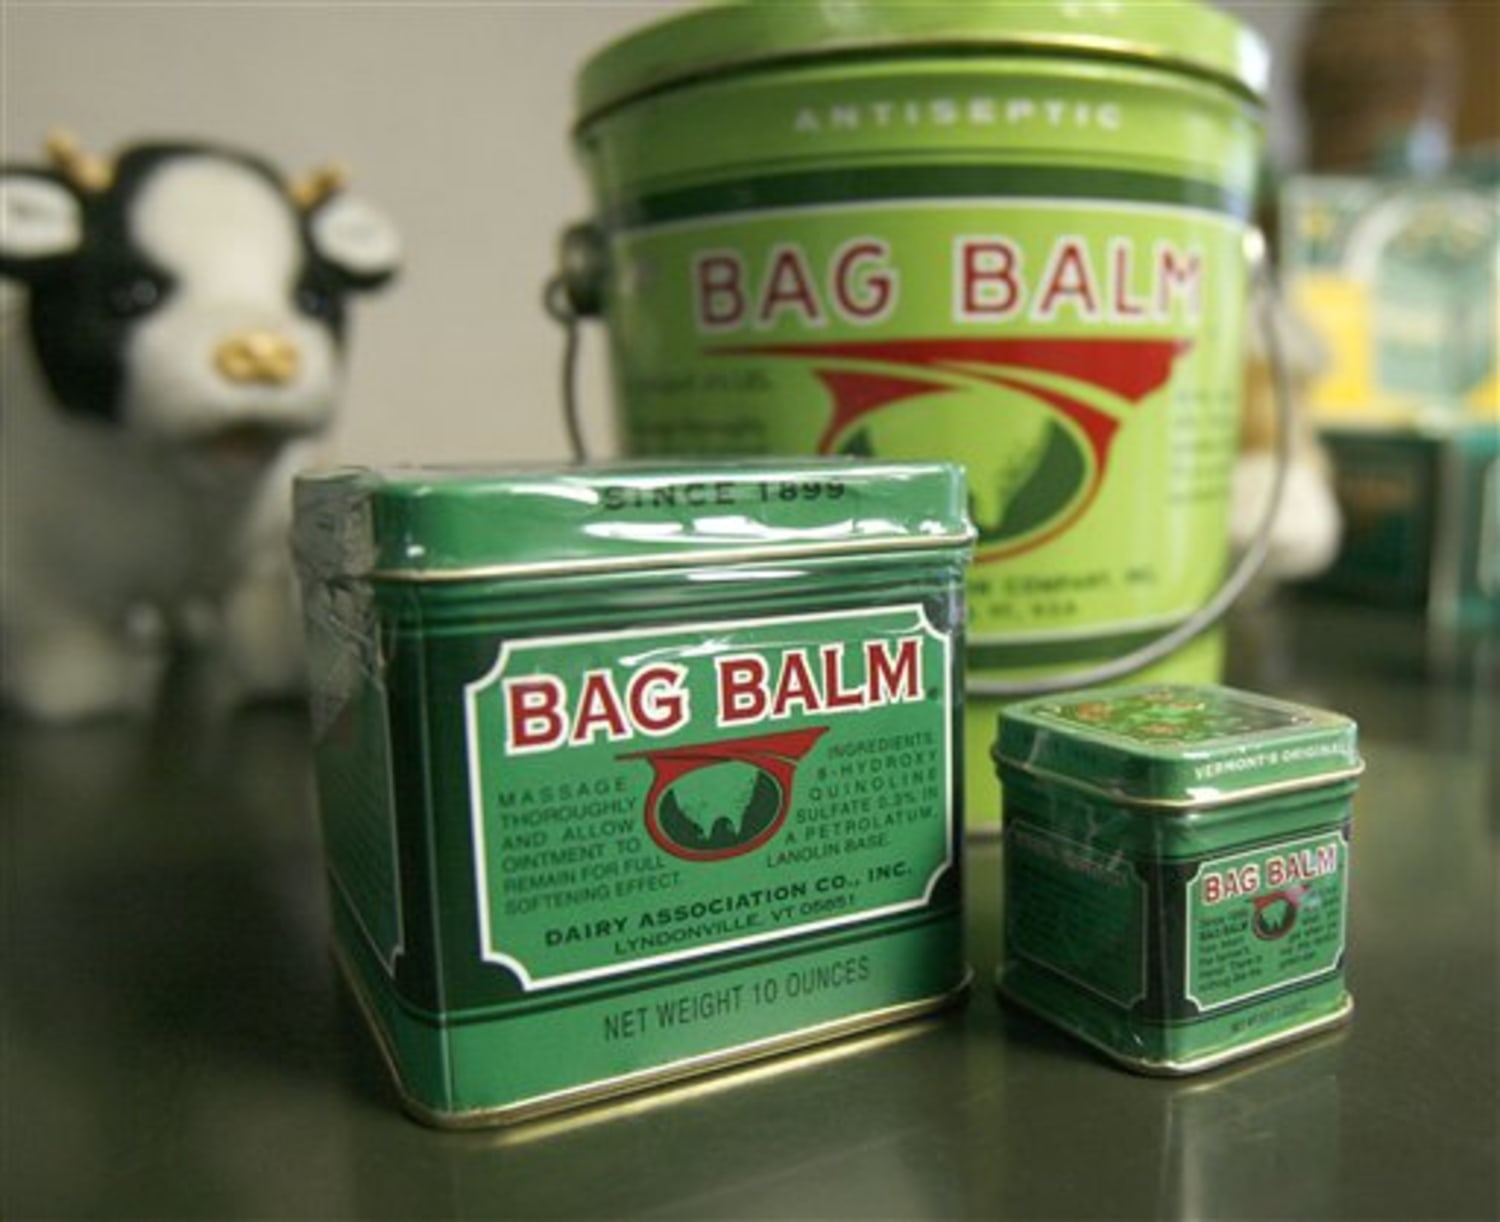 Vermont's Original Bag Balm Releases Special-Edition Gold Tin